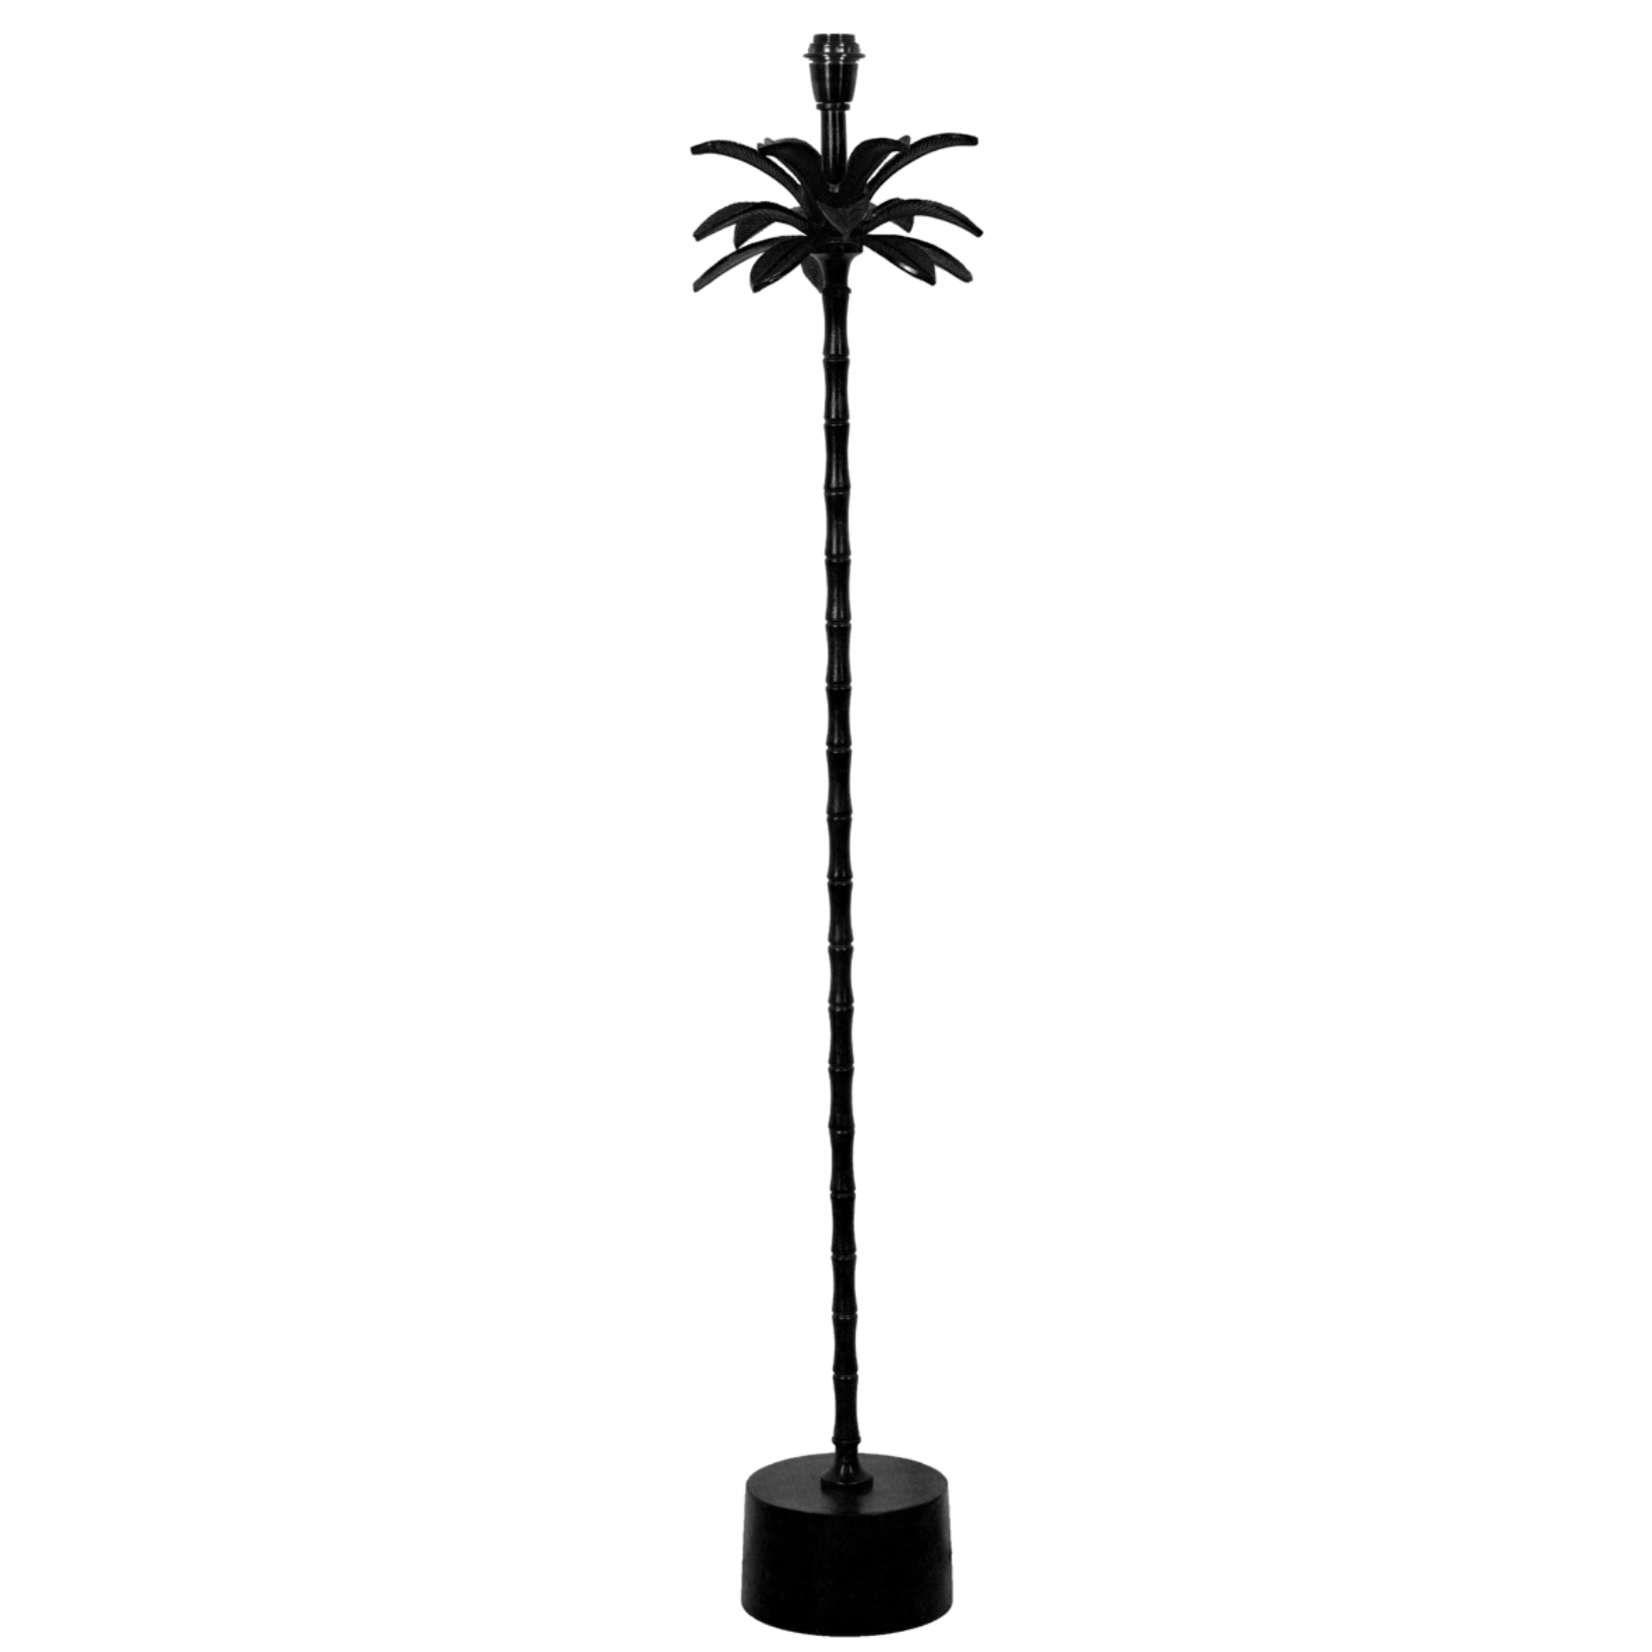 Stehleuchte Palme schwarz 25x145cm, E27